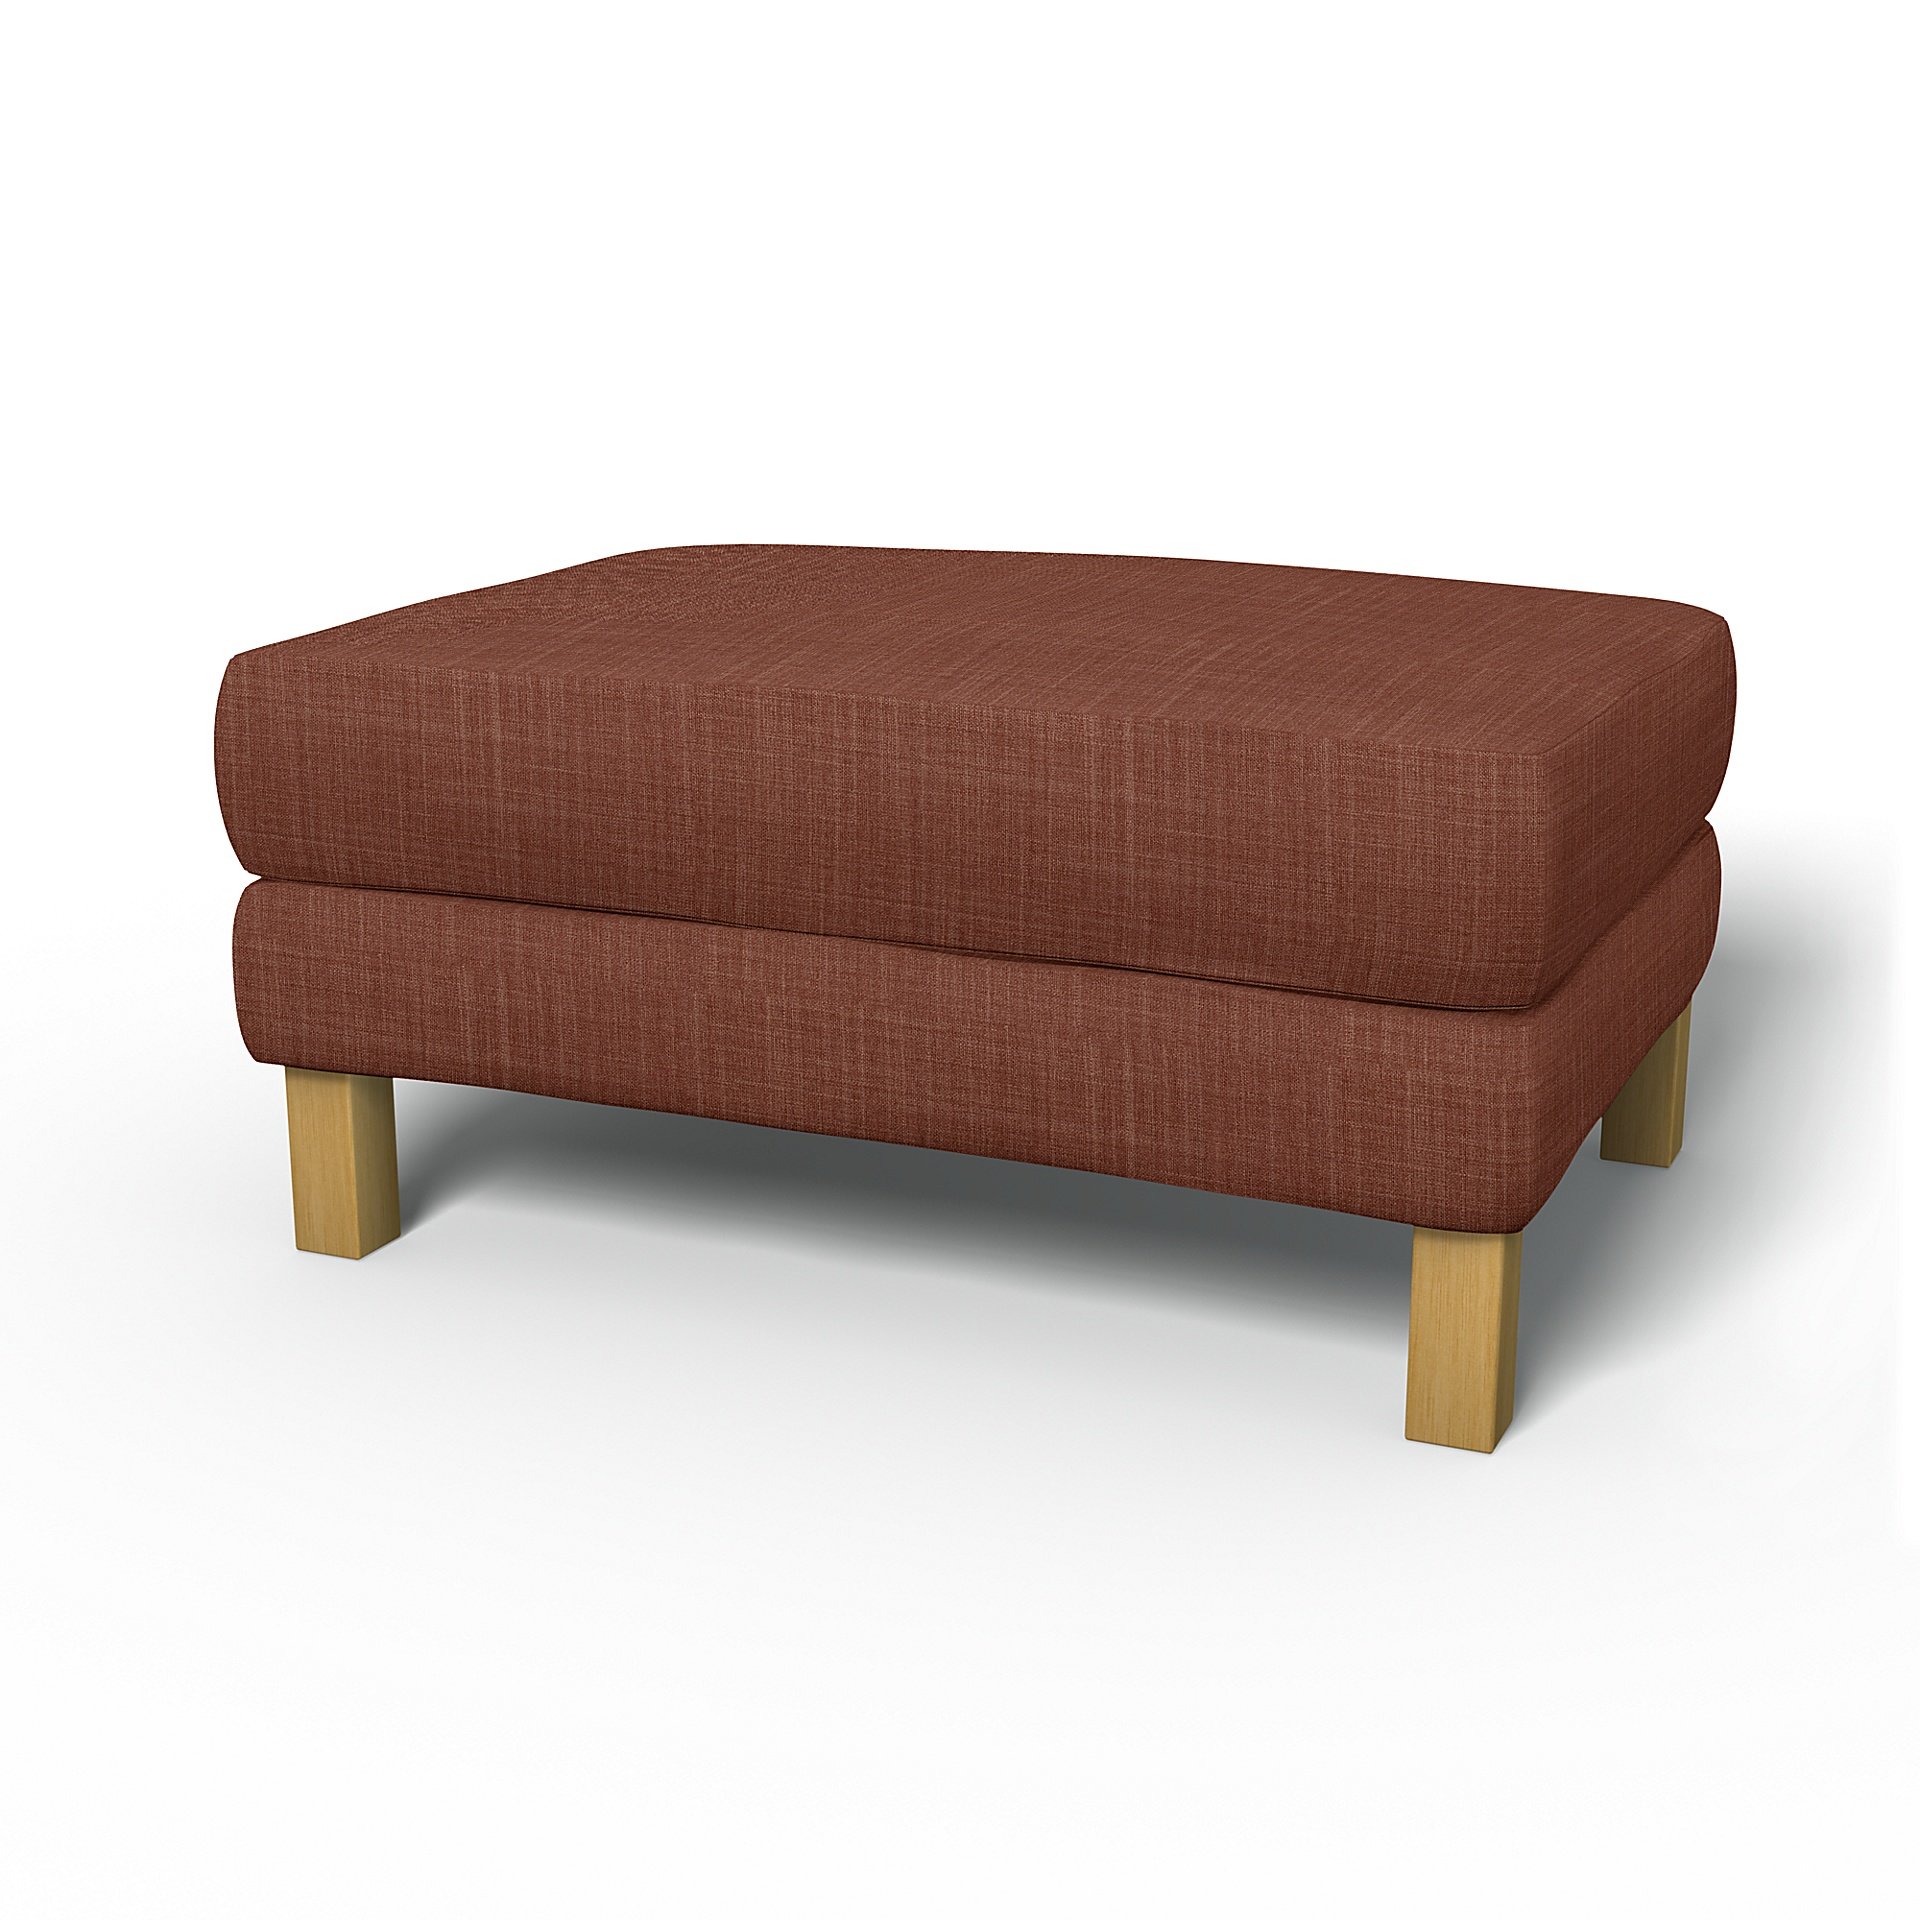 IKEA - Karlstad Footstool Cover, Rust, Boucle & Texture - Bemz